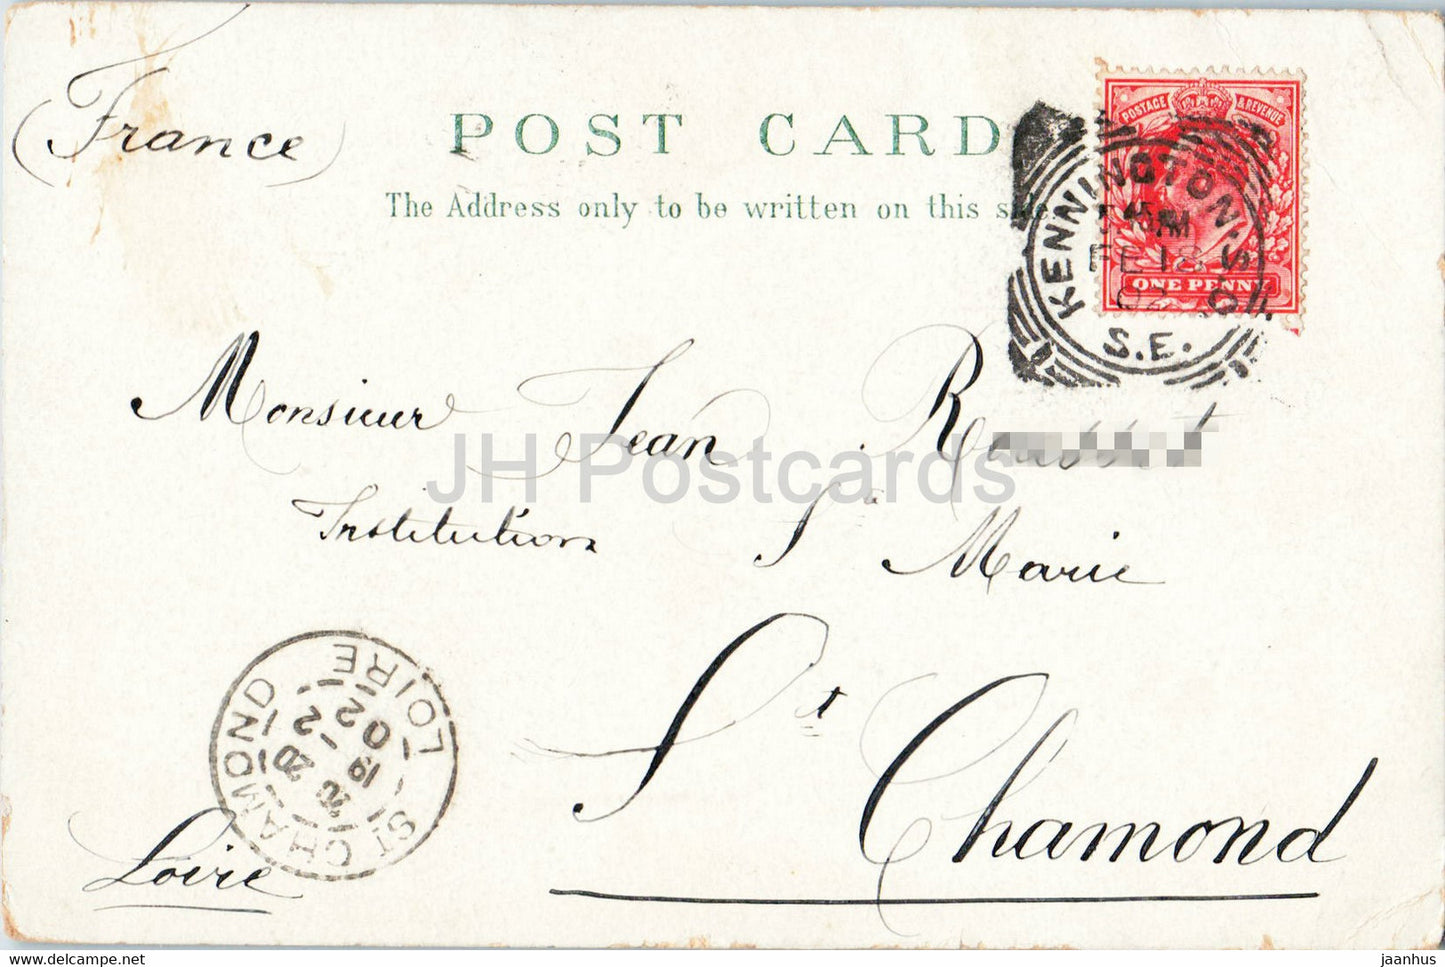 Londres - Piccadilly Circus - calèche - carte postale ancienne - 1902 - Angleterre - Royaume-Uni - utilisé